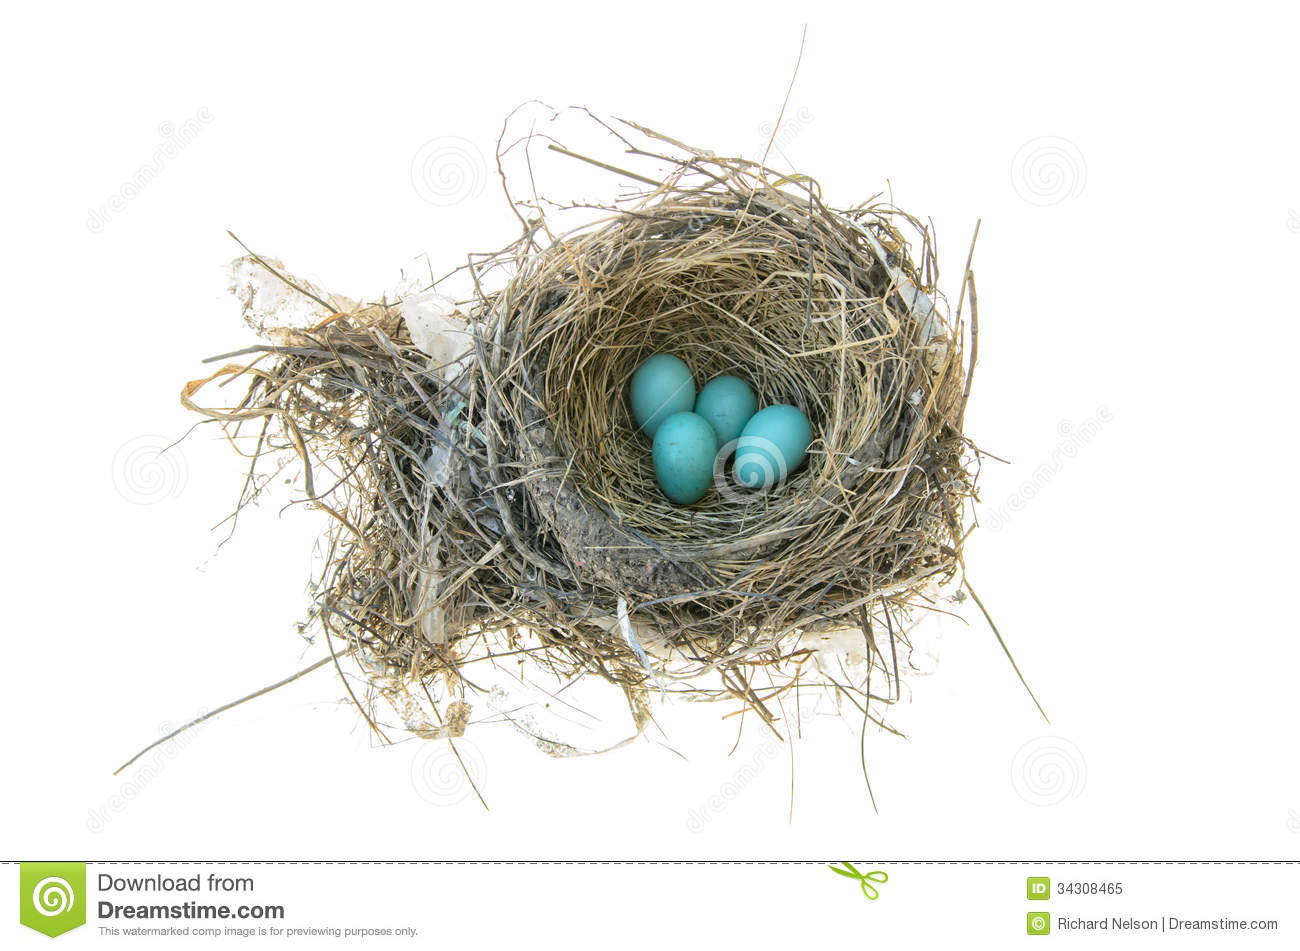 Robin S Bird Nest Royalty Free Stock Photo   Image  34308465